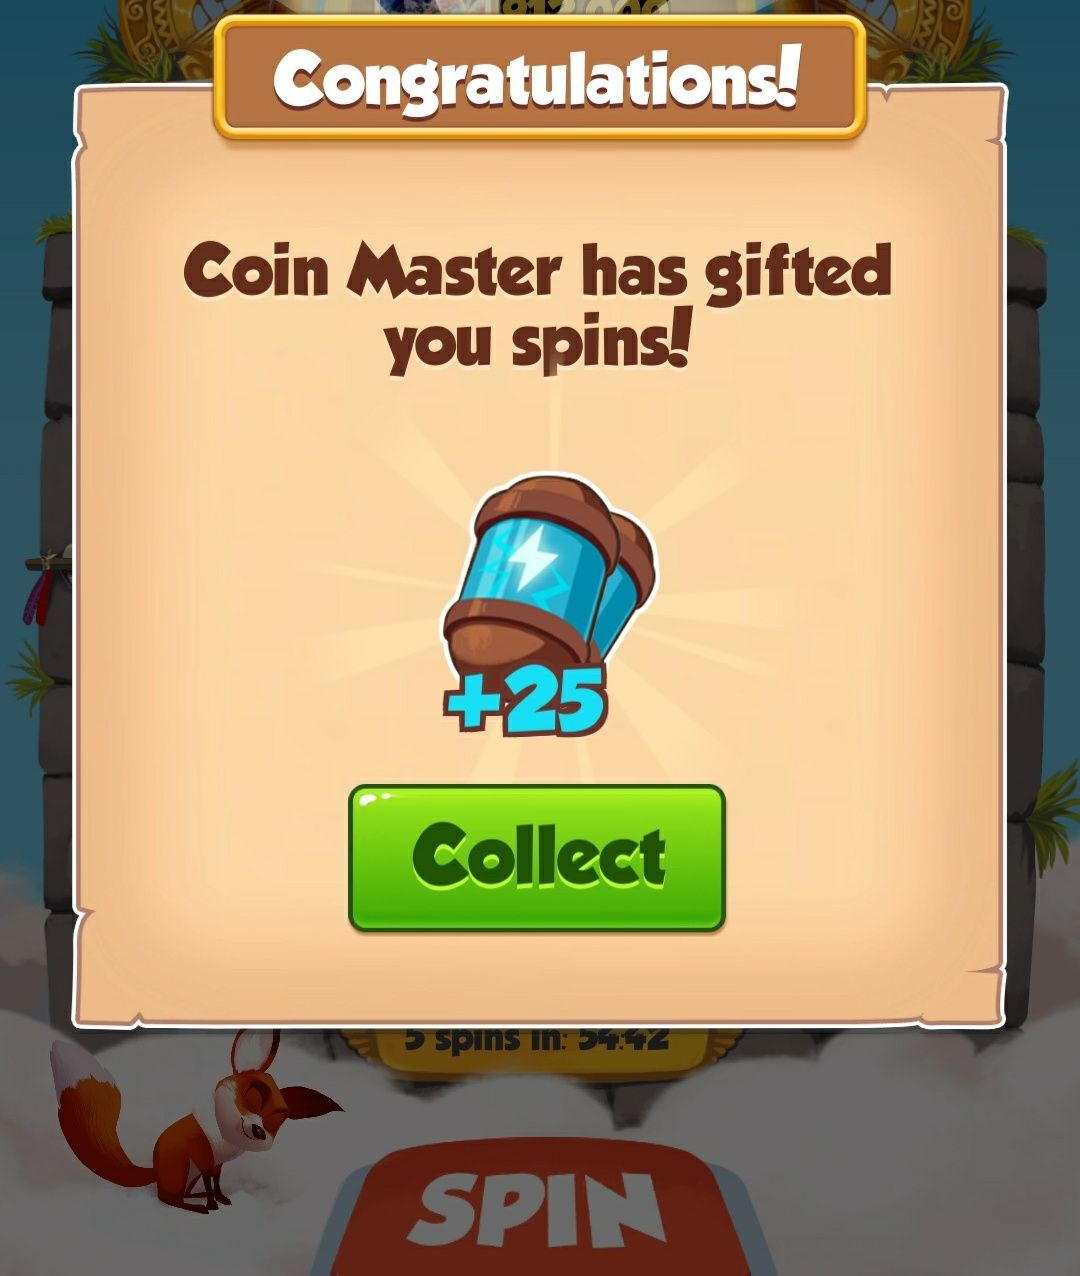 Co8n Master Spins